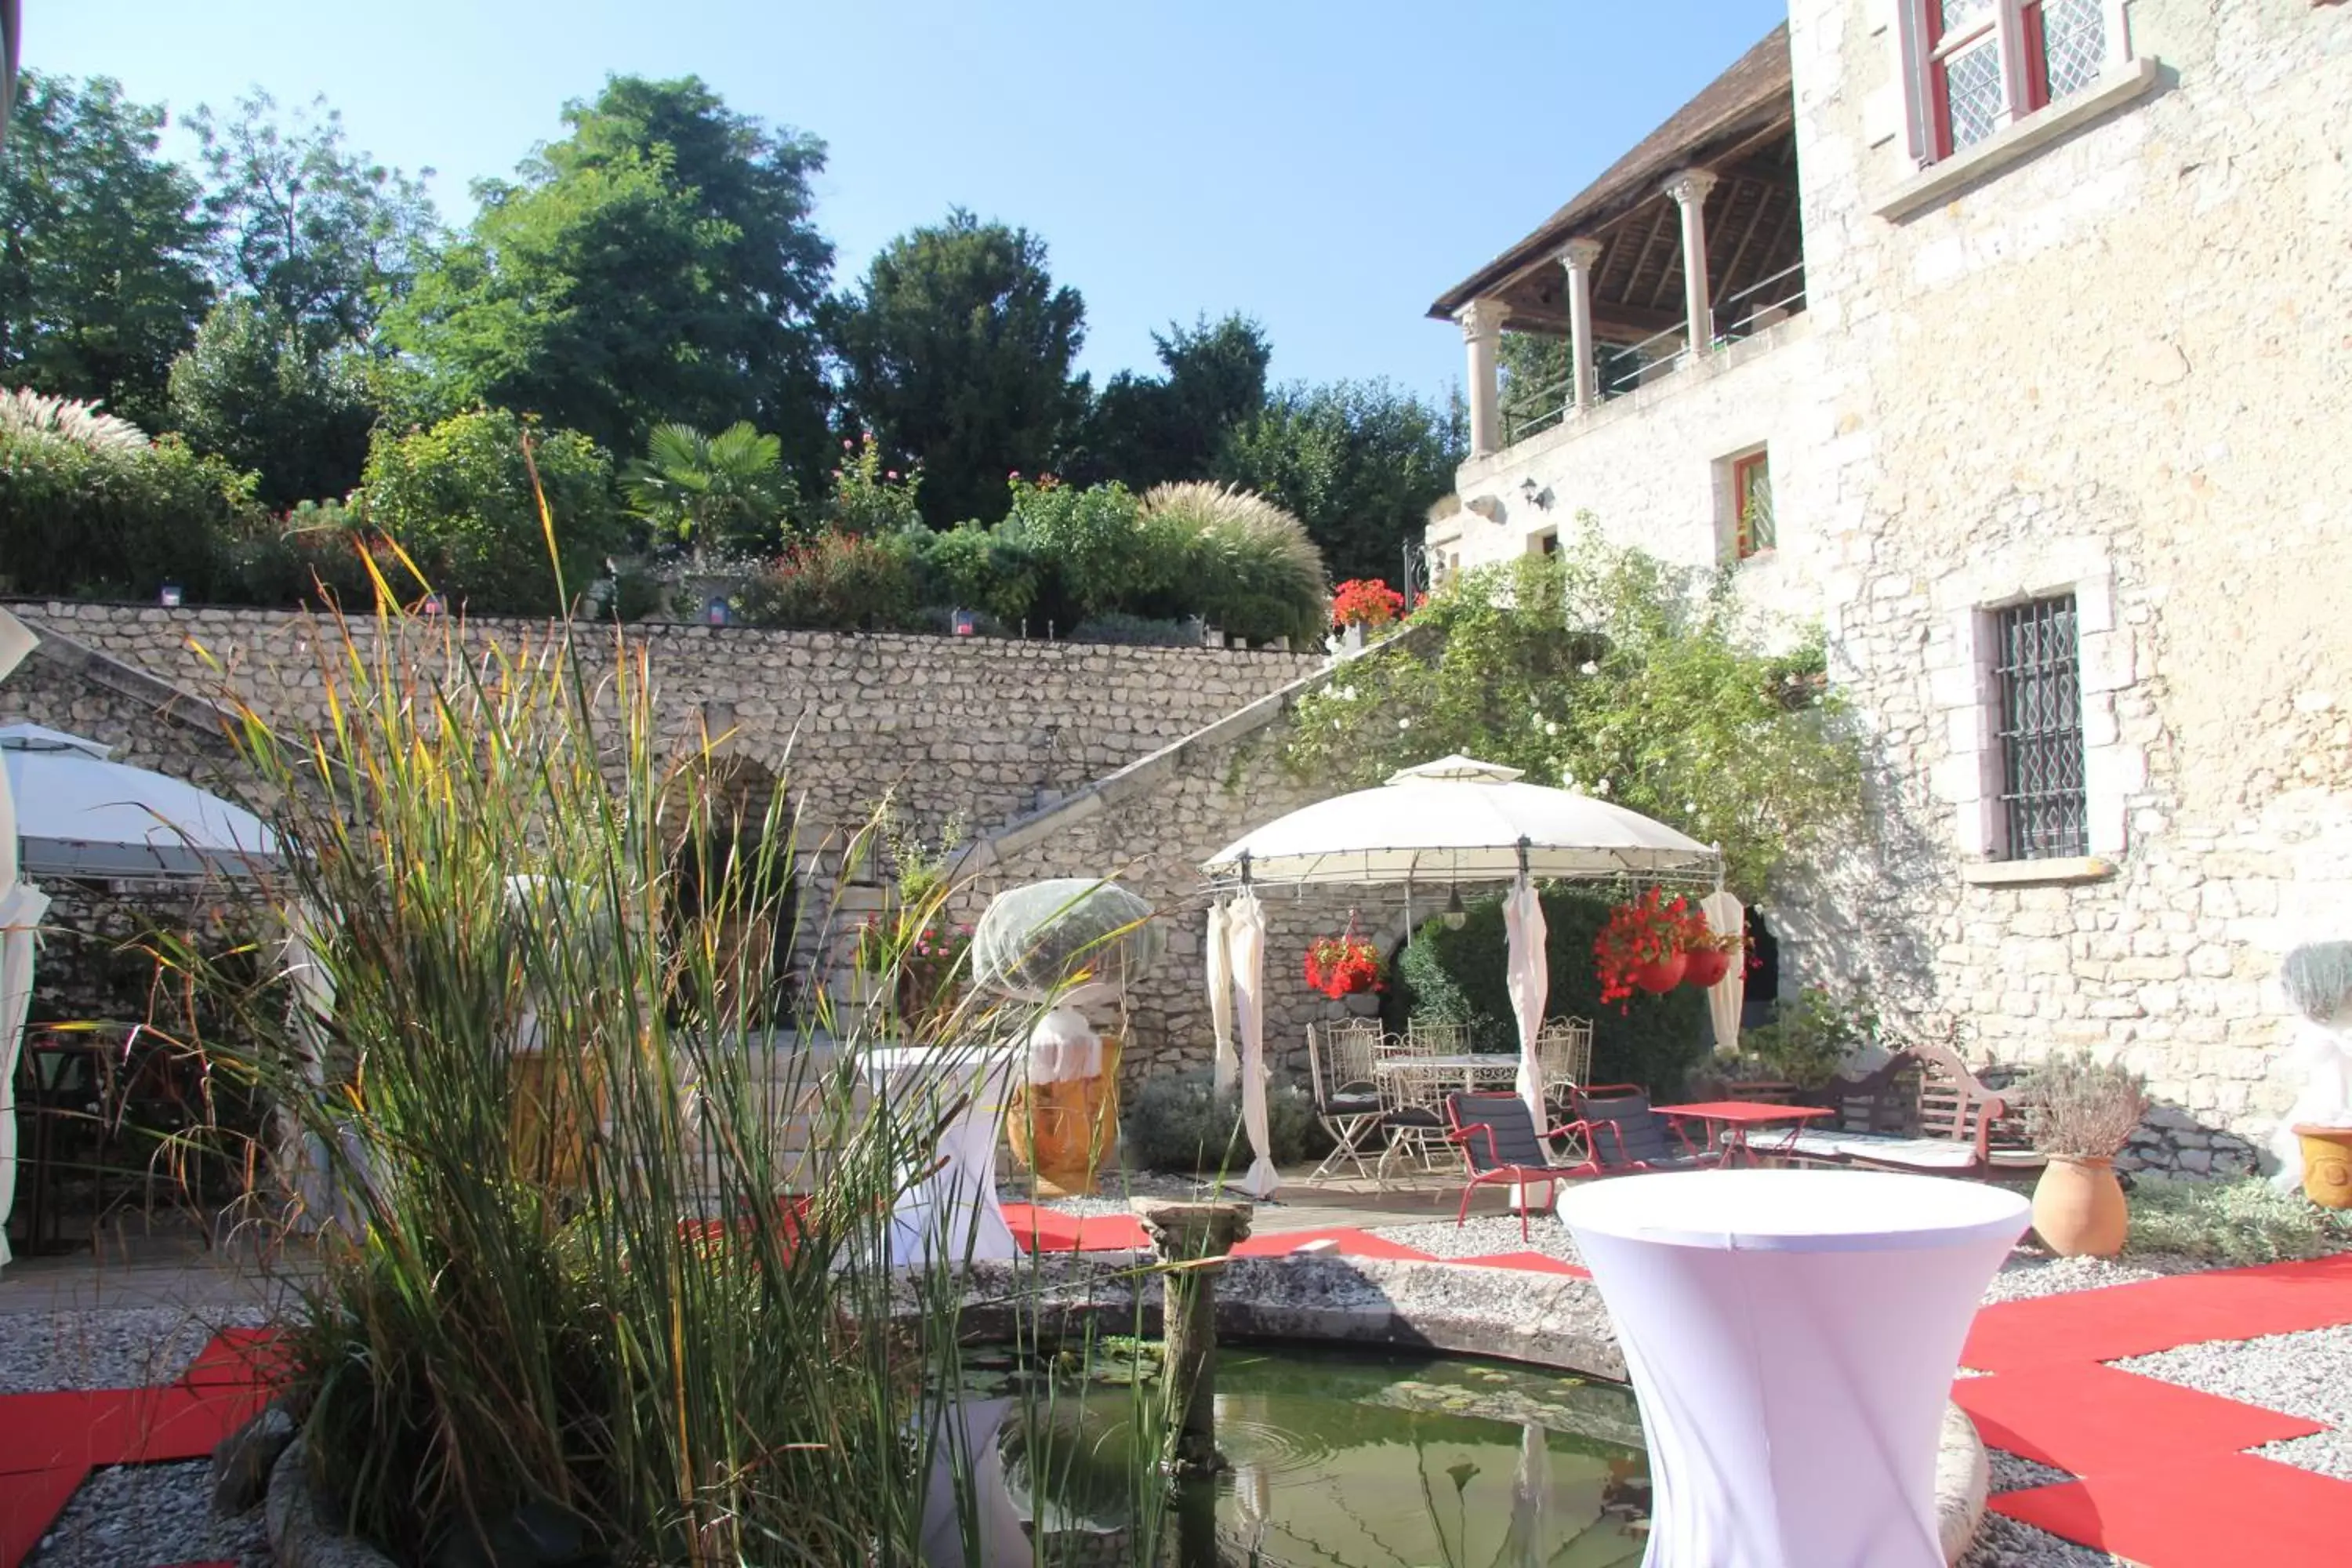 Garden view in Demeure des Vieux Bains